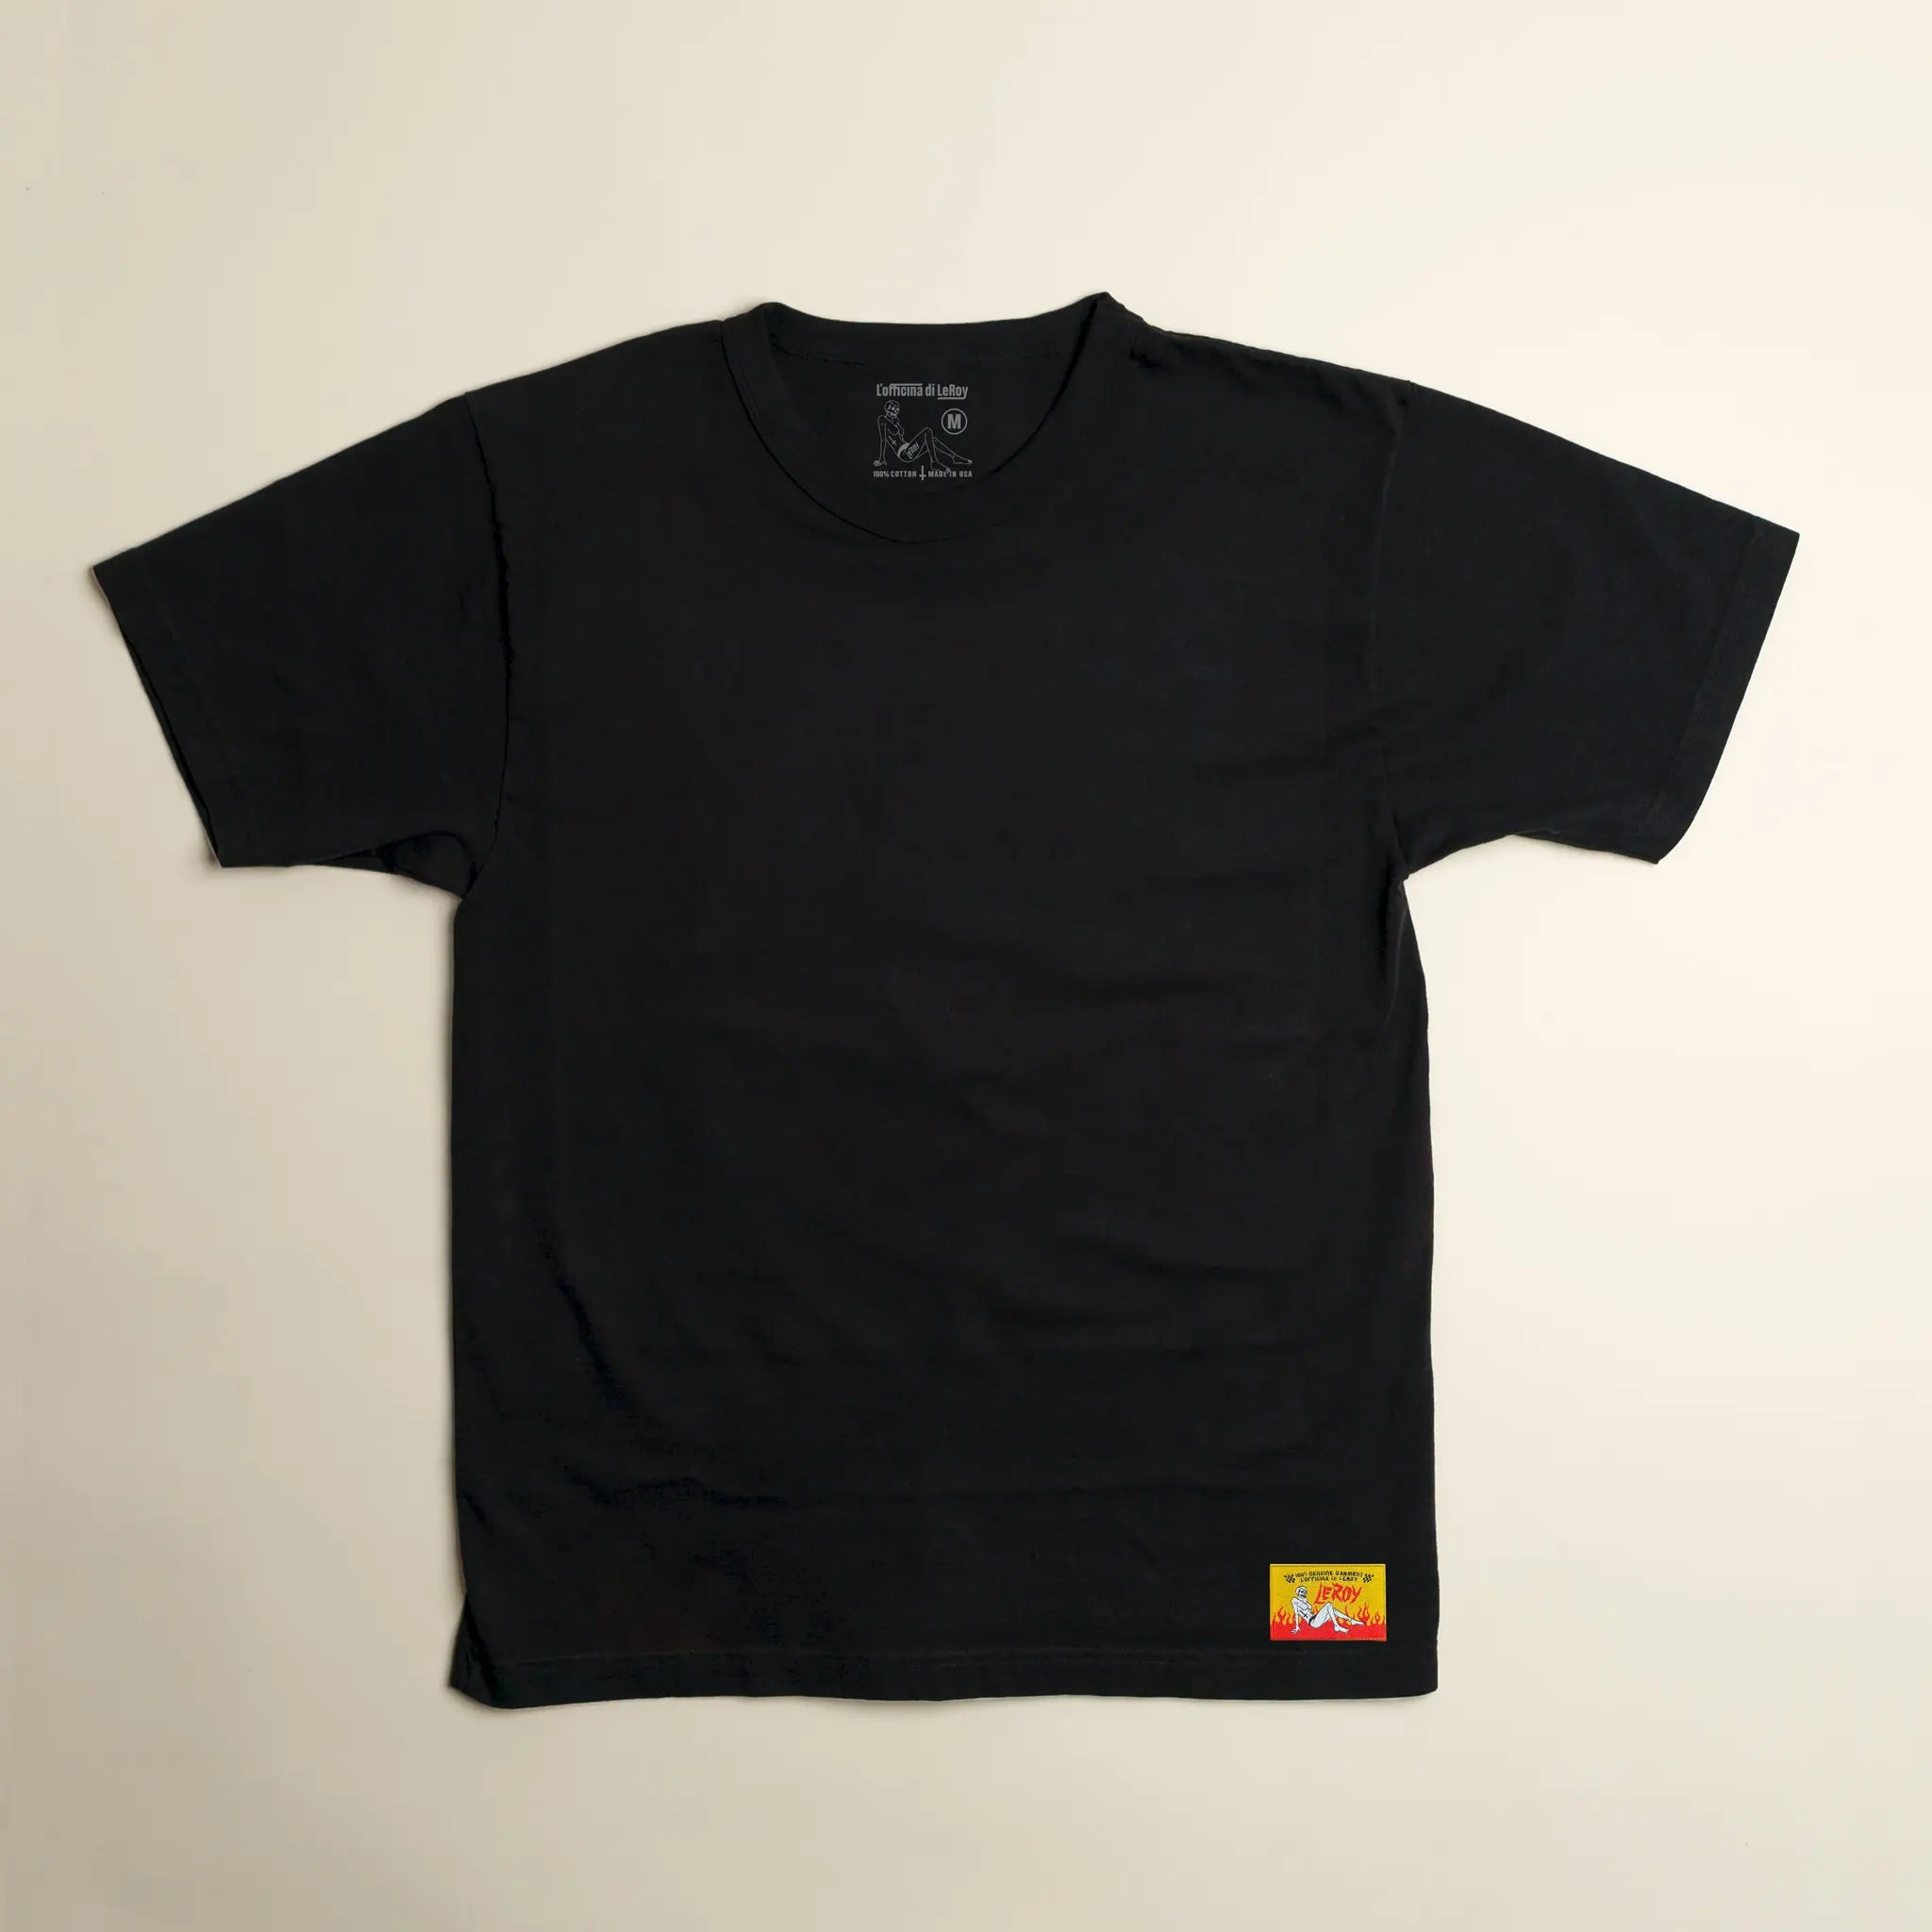 LeRoy Label Heavy Weight Black T-Shirt